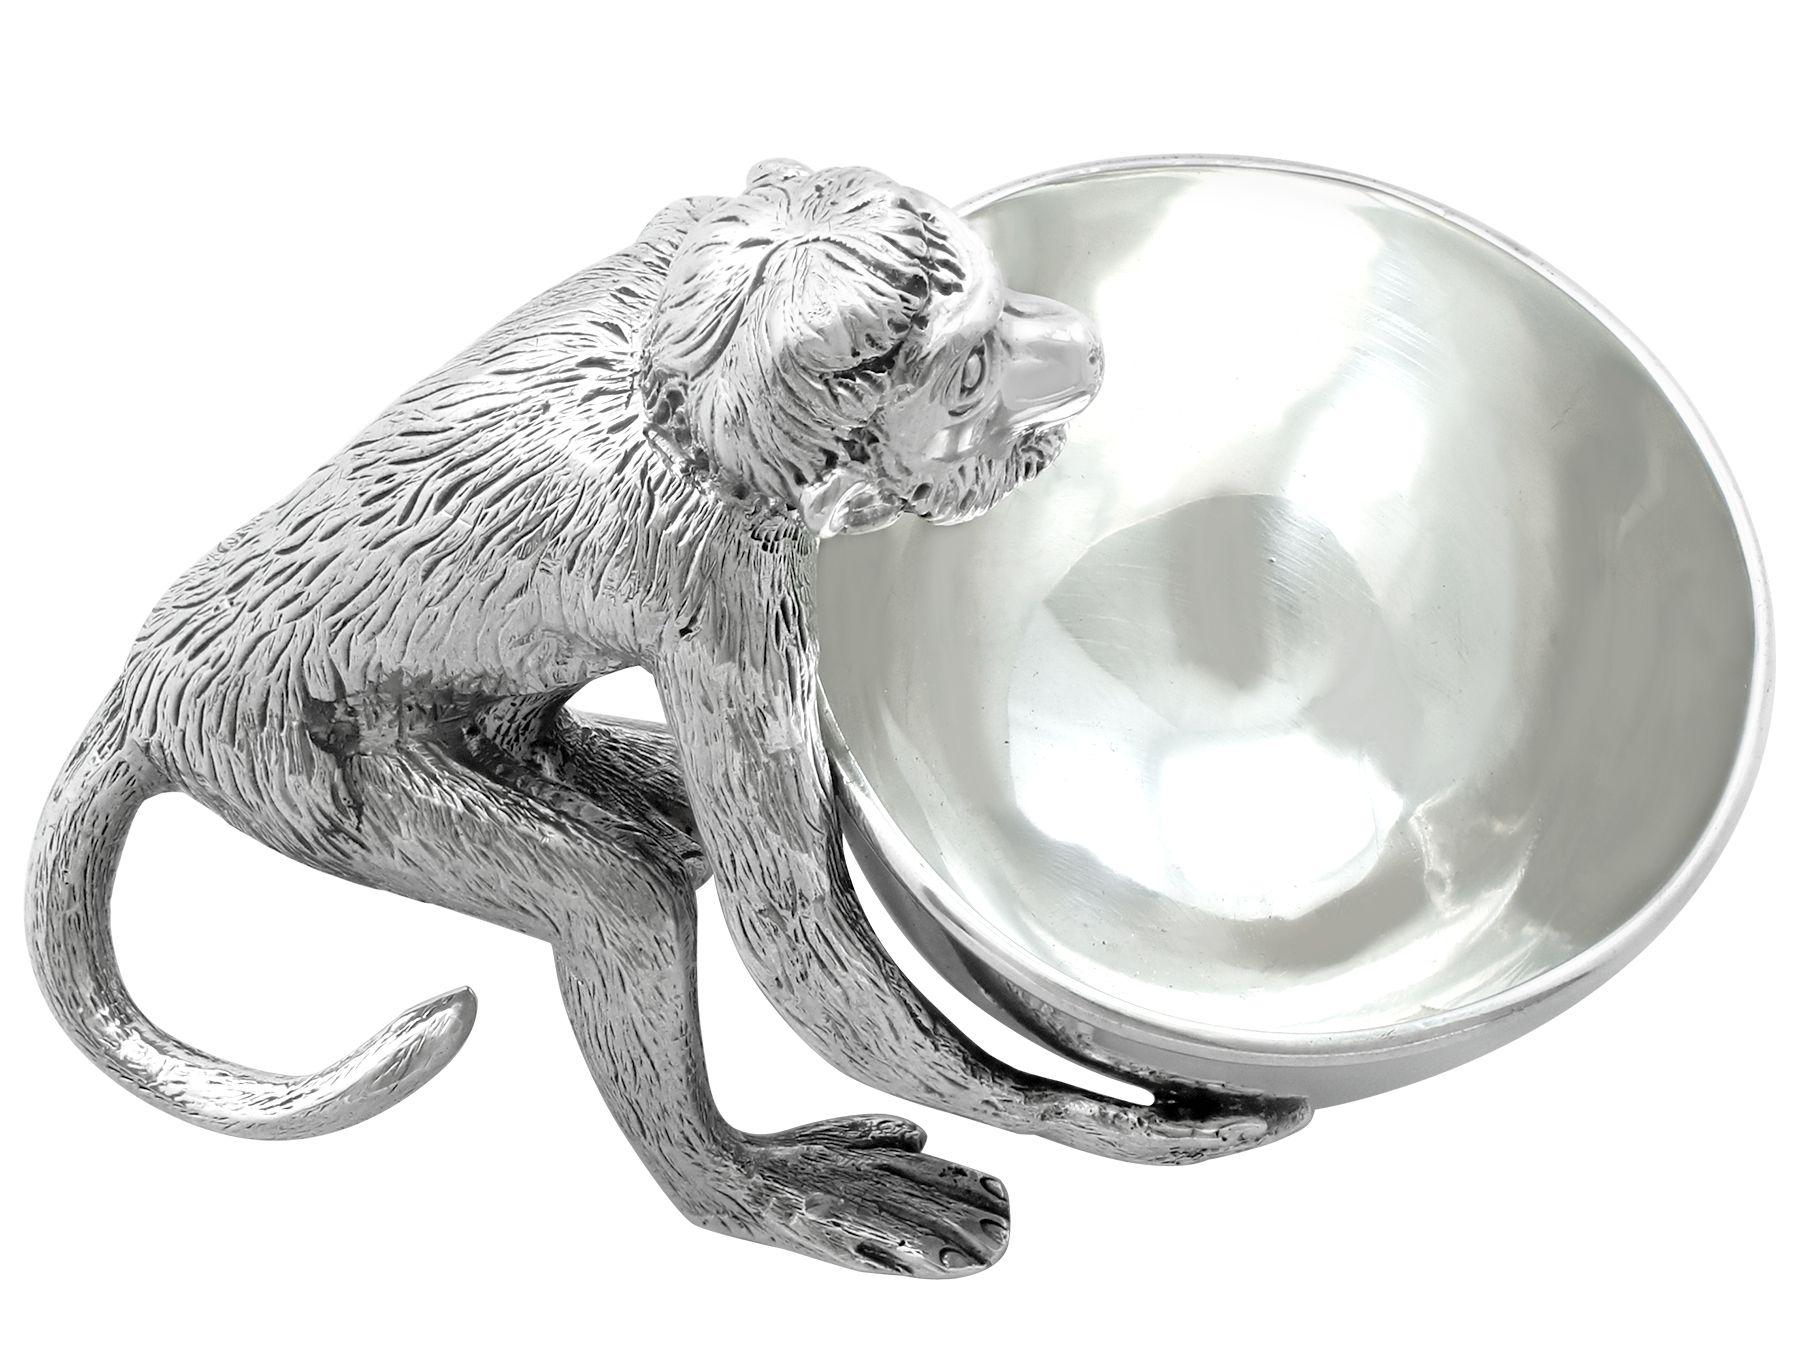 monkey bowl meaning